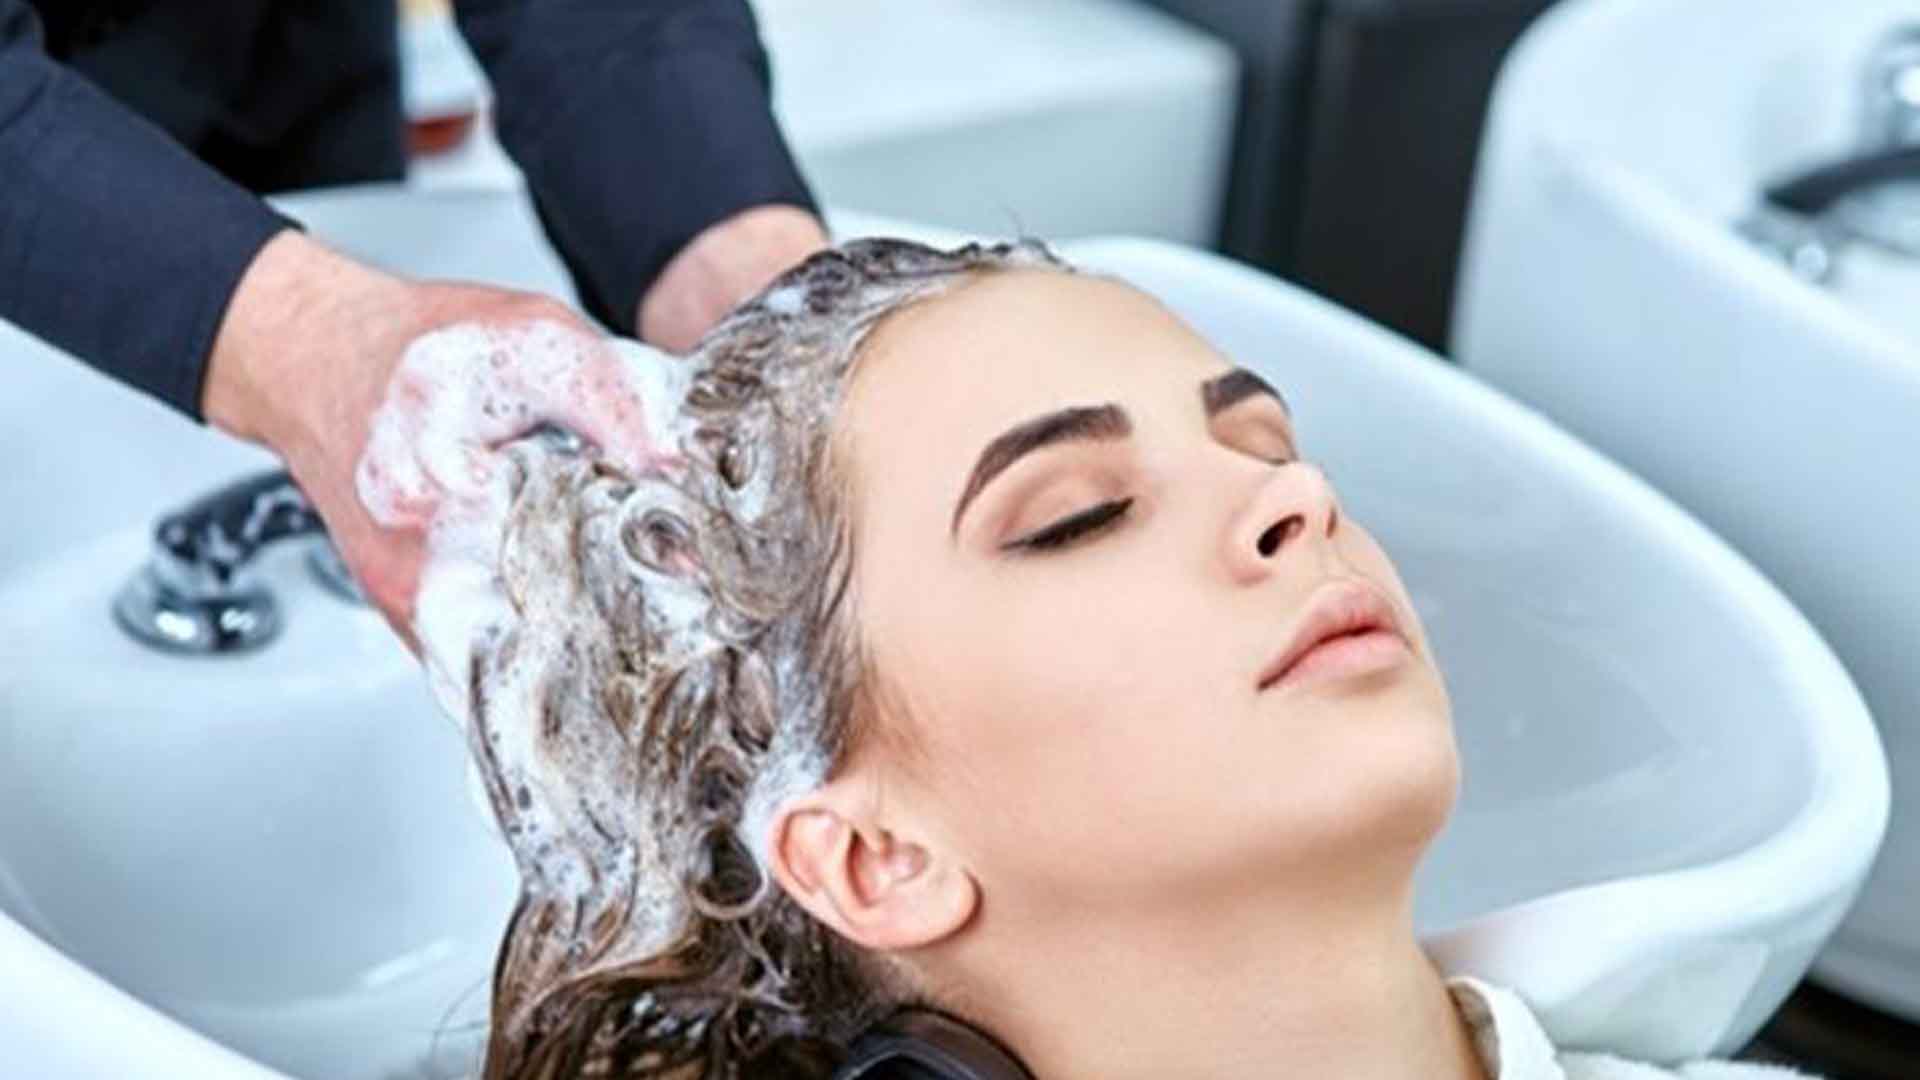 Apa Saja sih Manfaat Creambath untuk Rambut? - Berita Seleb Terkini